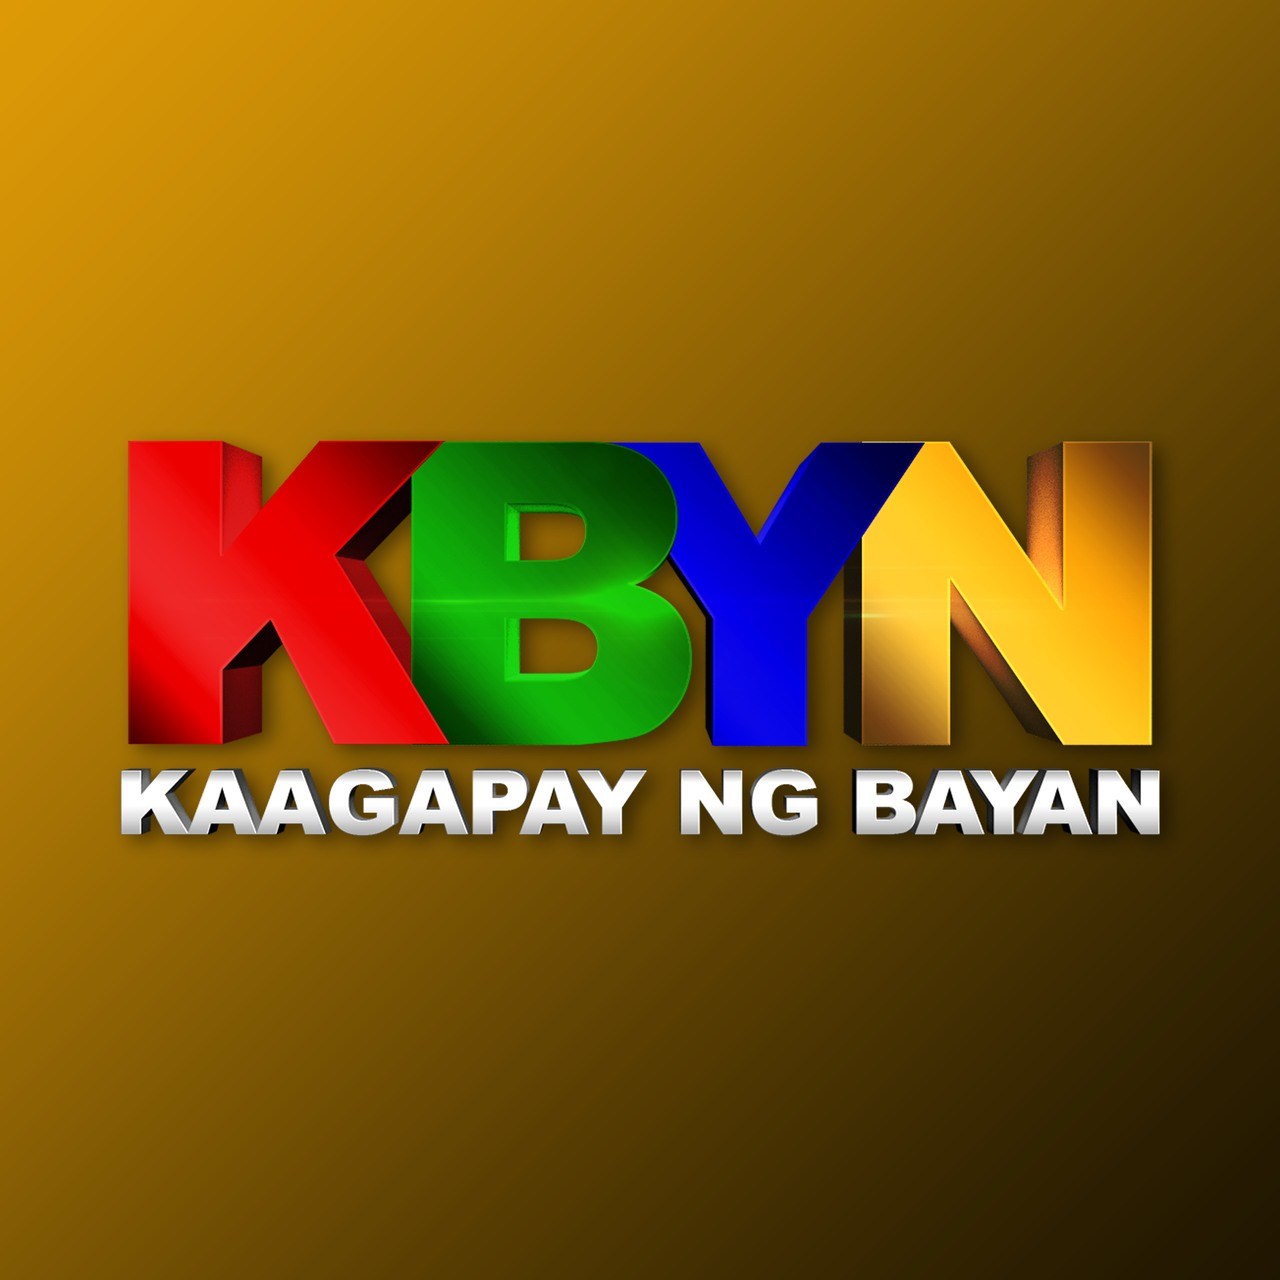 kbyn logo